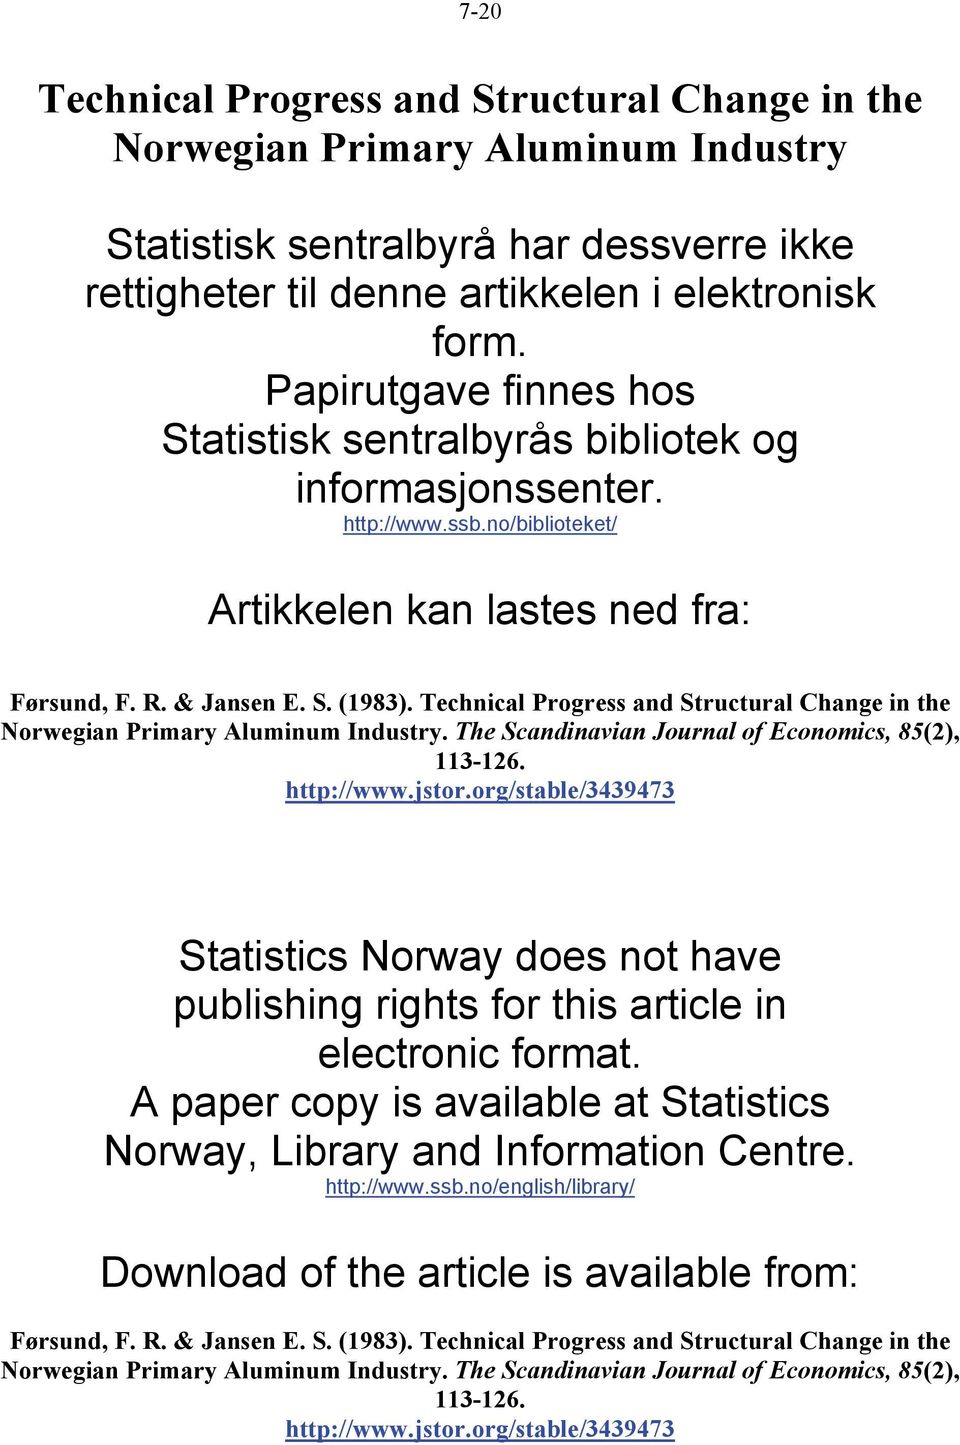 Technical Progress and Structural Change in the Norwegian Primary Aluminum Industry. The Scandinavian Journal of Economics, 85(2), 113-126. http://www.jstor.